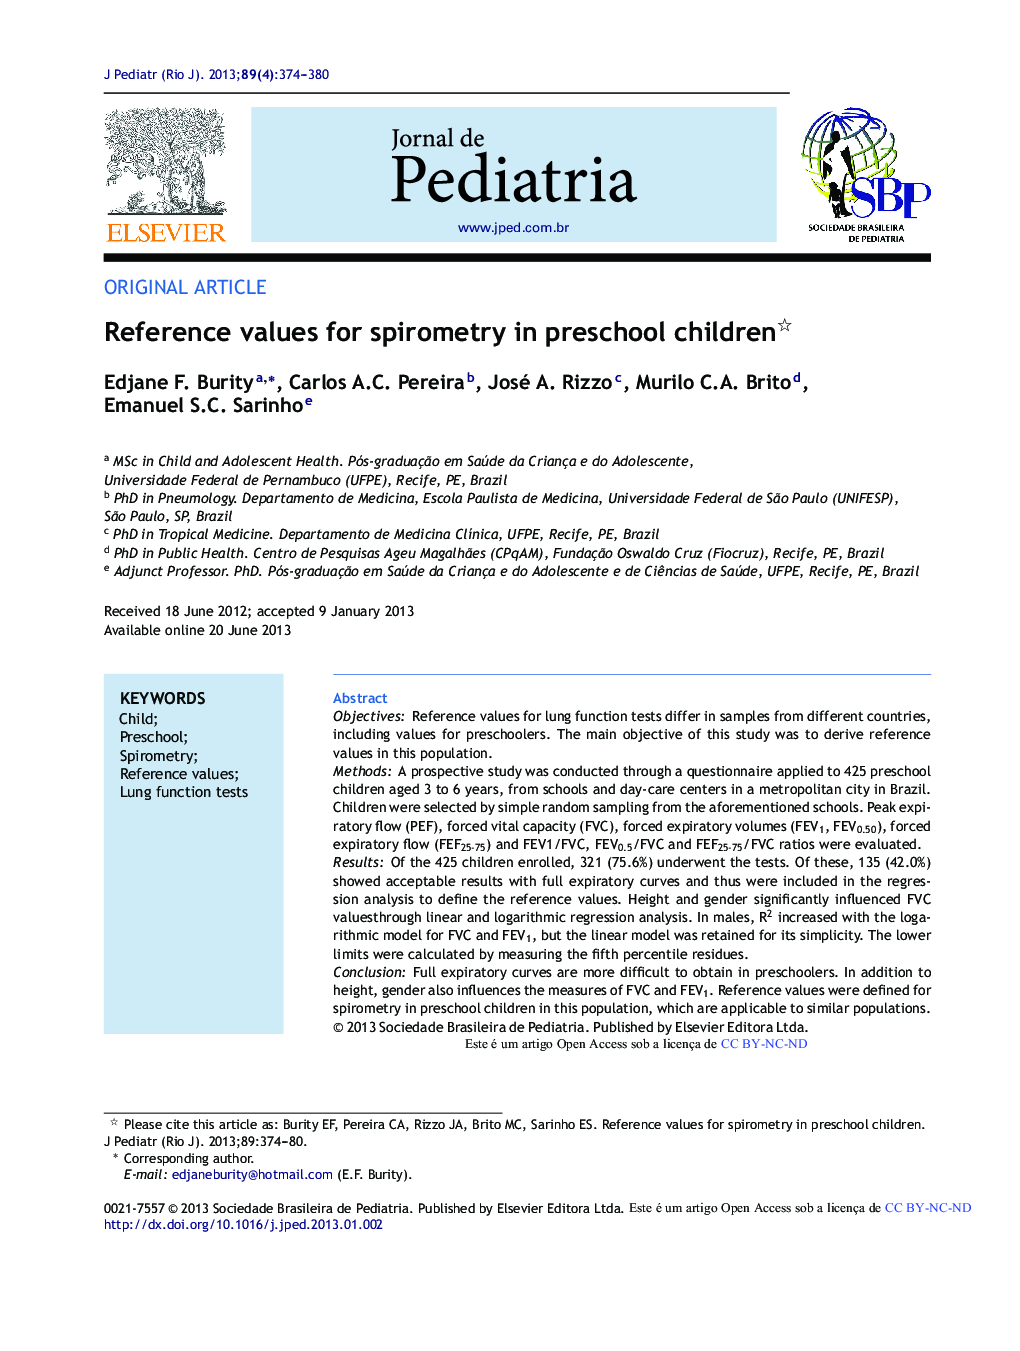 Reference values for spirometry in preschool children 